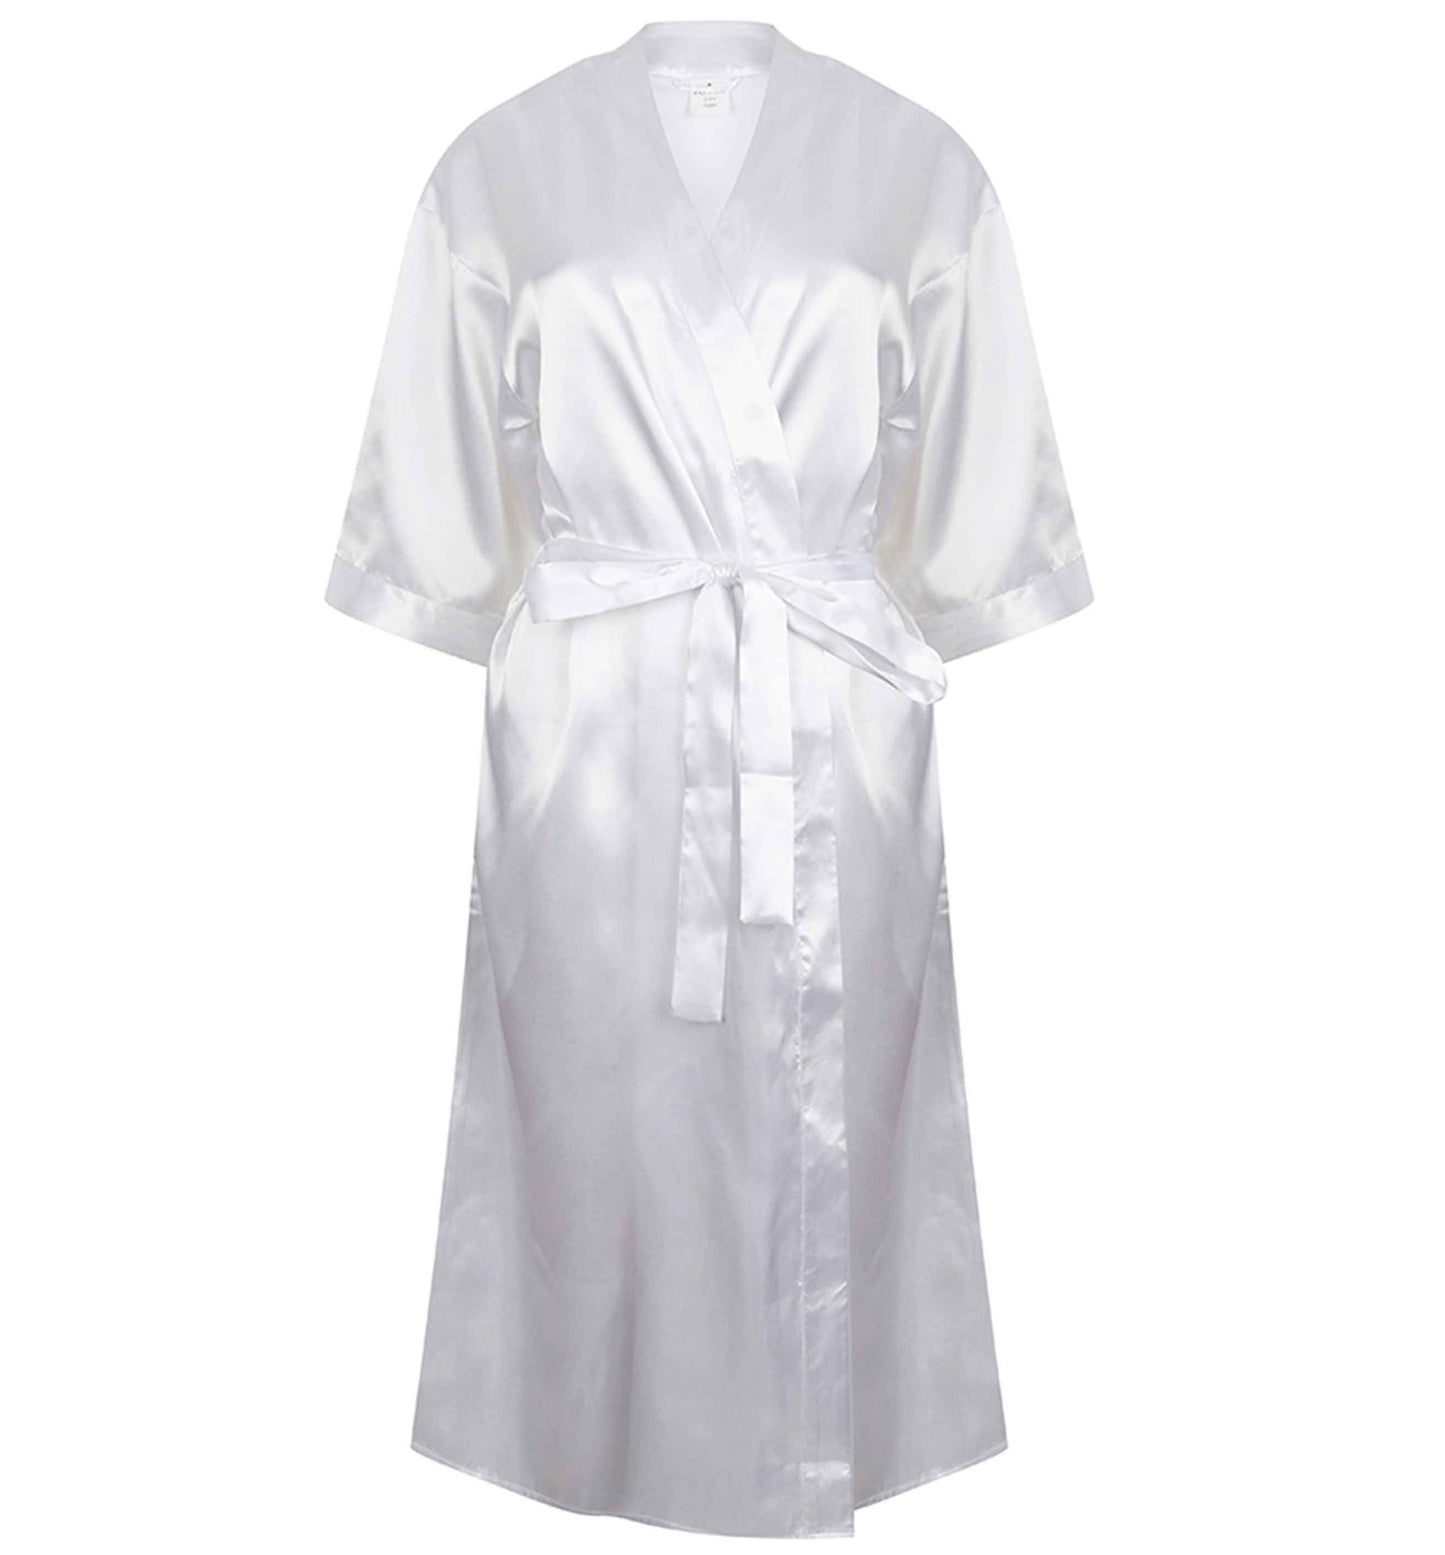 Happy Easter - personalised | 8-18 | Kimono style satin robe | Ladies dressing gown